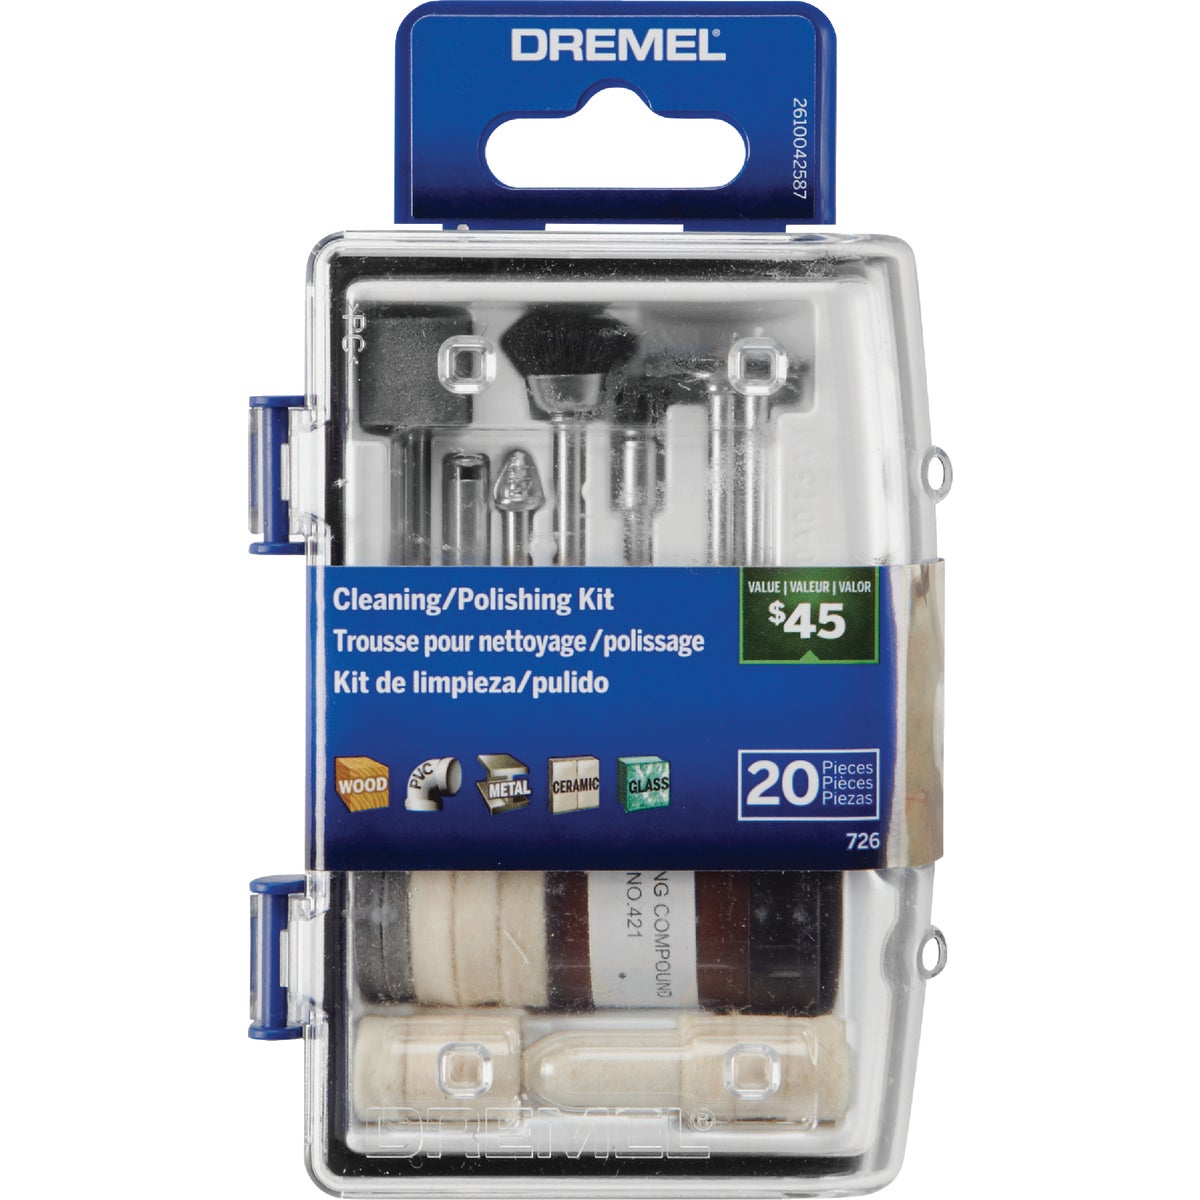 Dremel Cleaning/ Polishing Rotary Tool Accessory Kit (20-Piece)